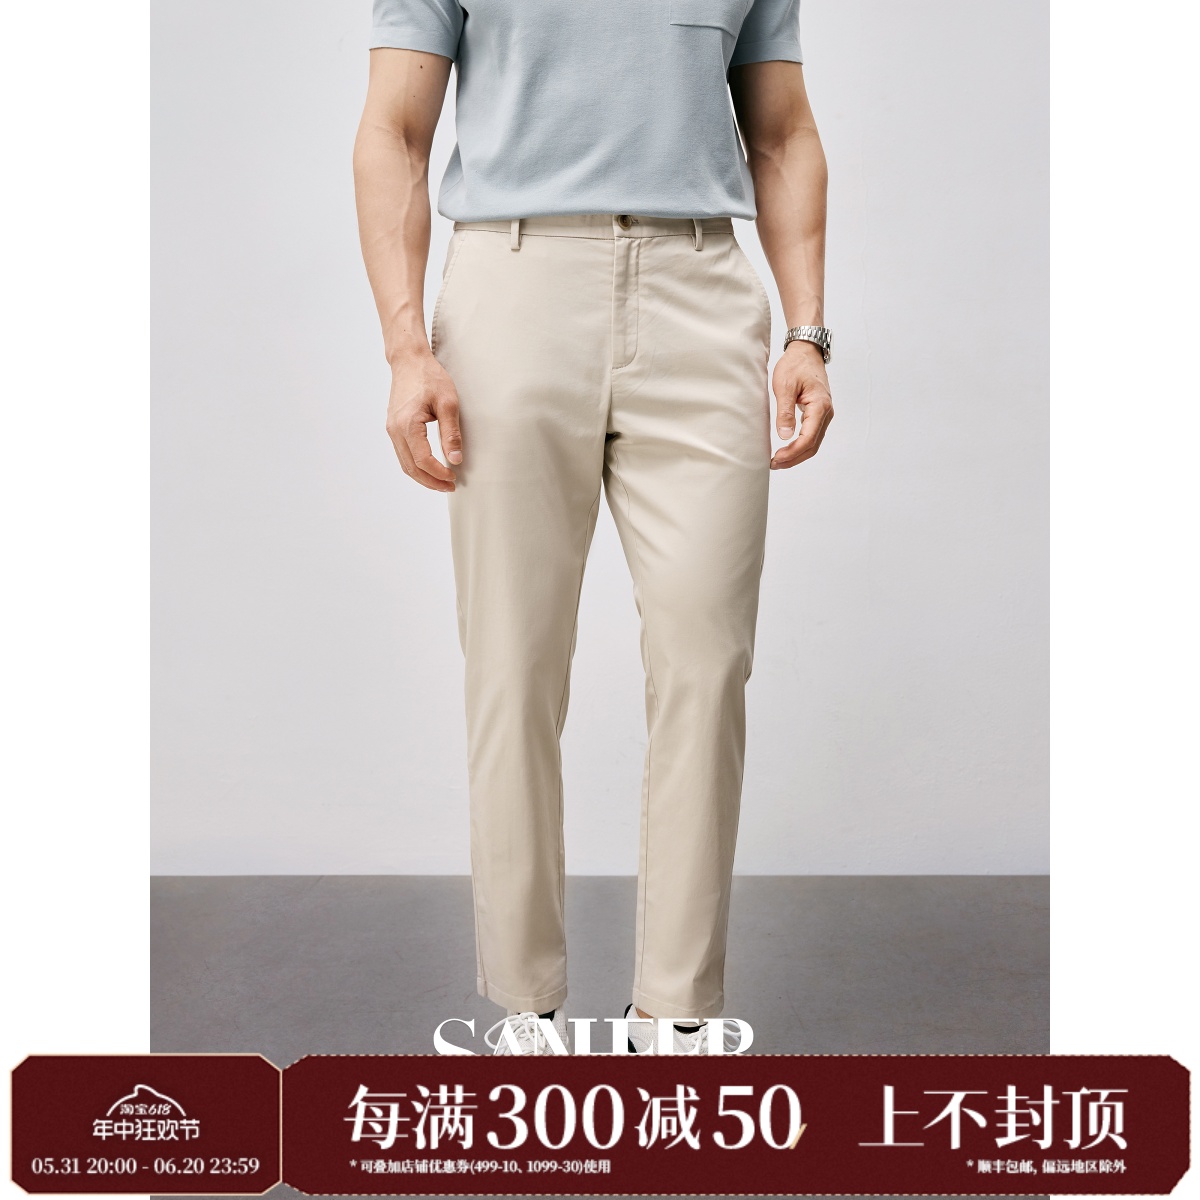 【SANHEER】夏季甄选 日本有机冷感棉面料 男士锥型休闲裤 DBL969